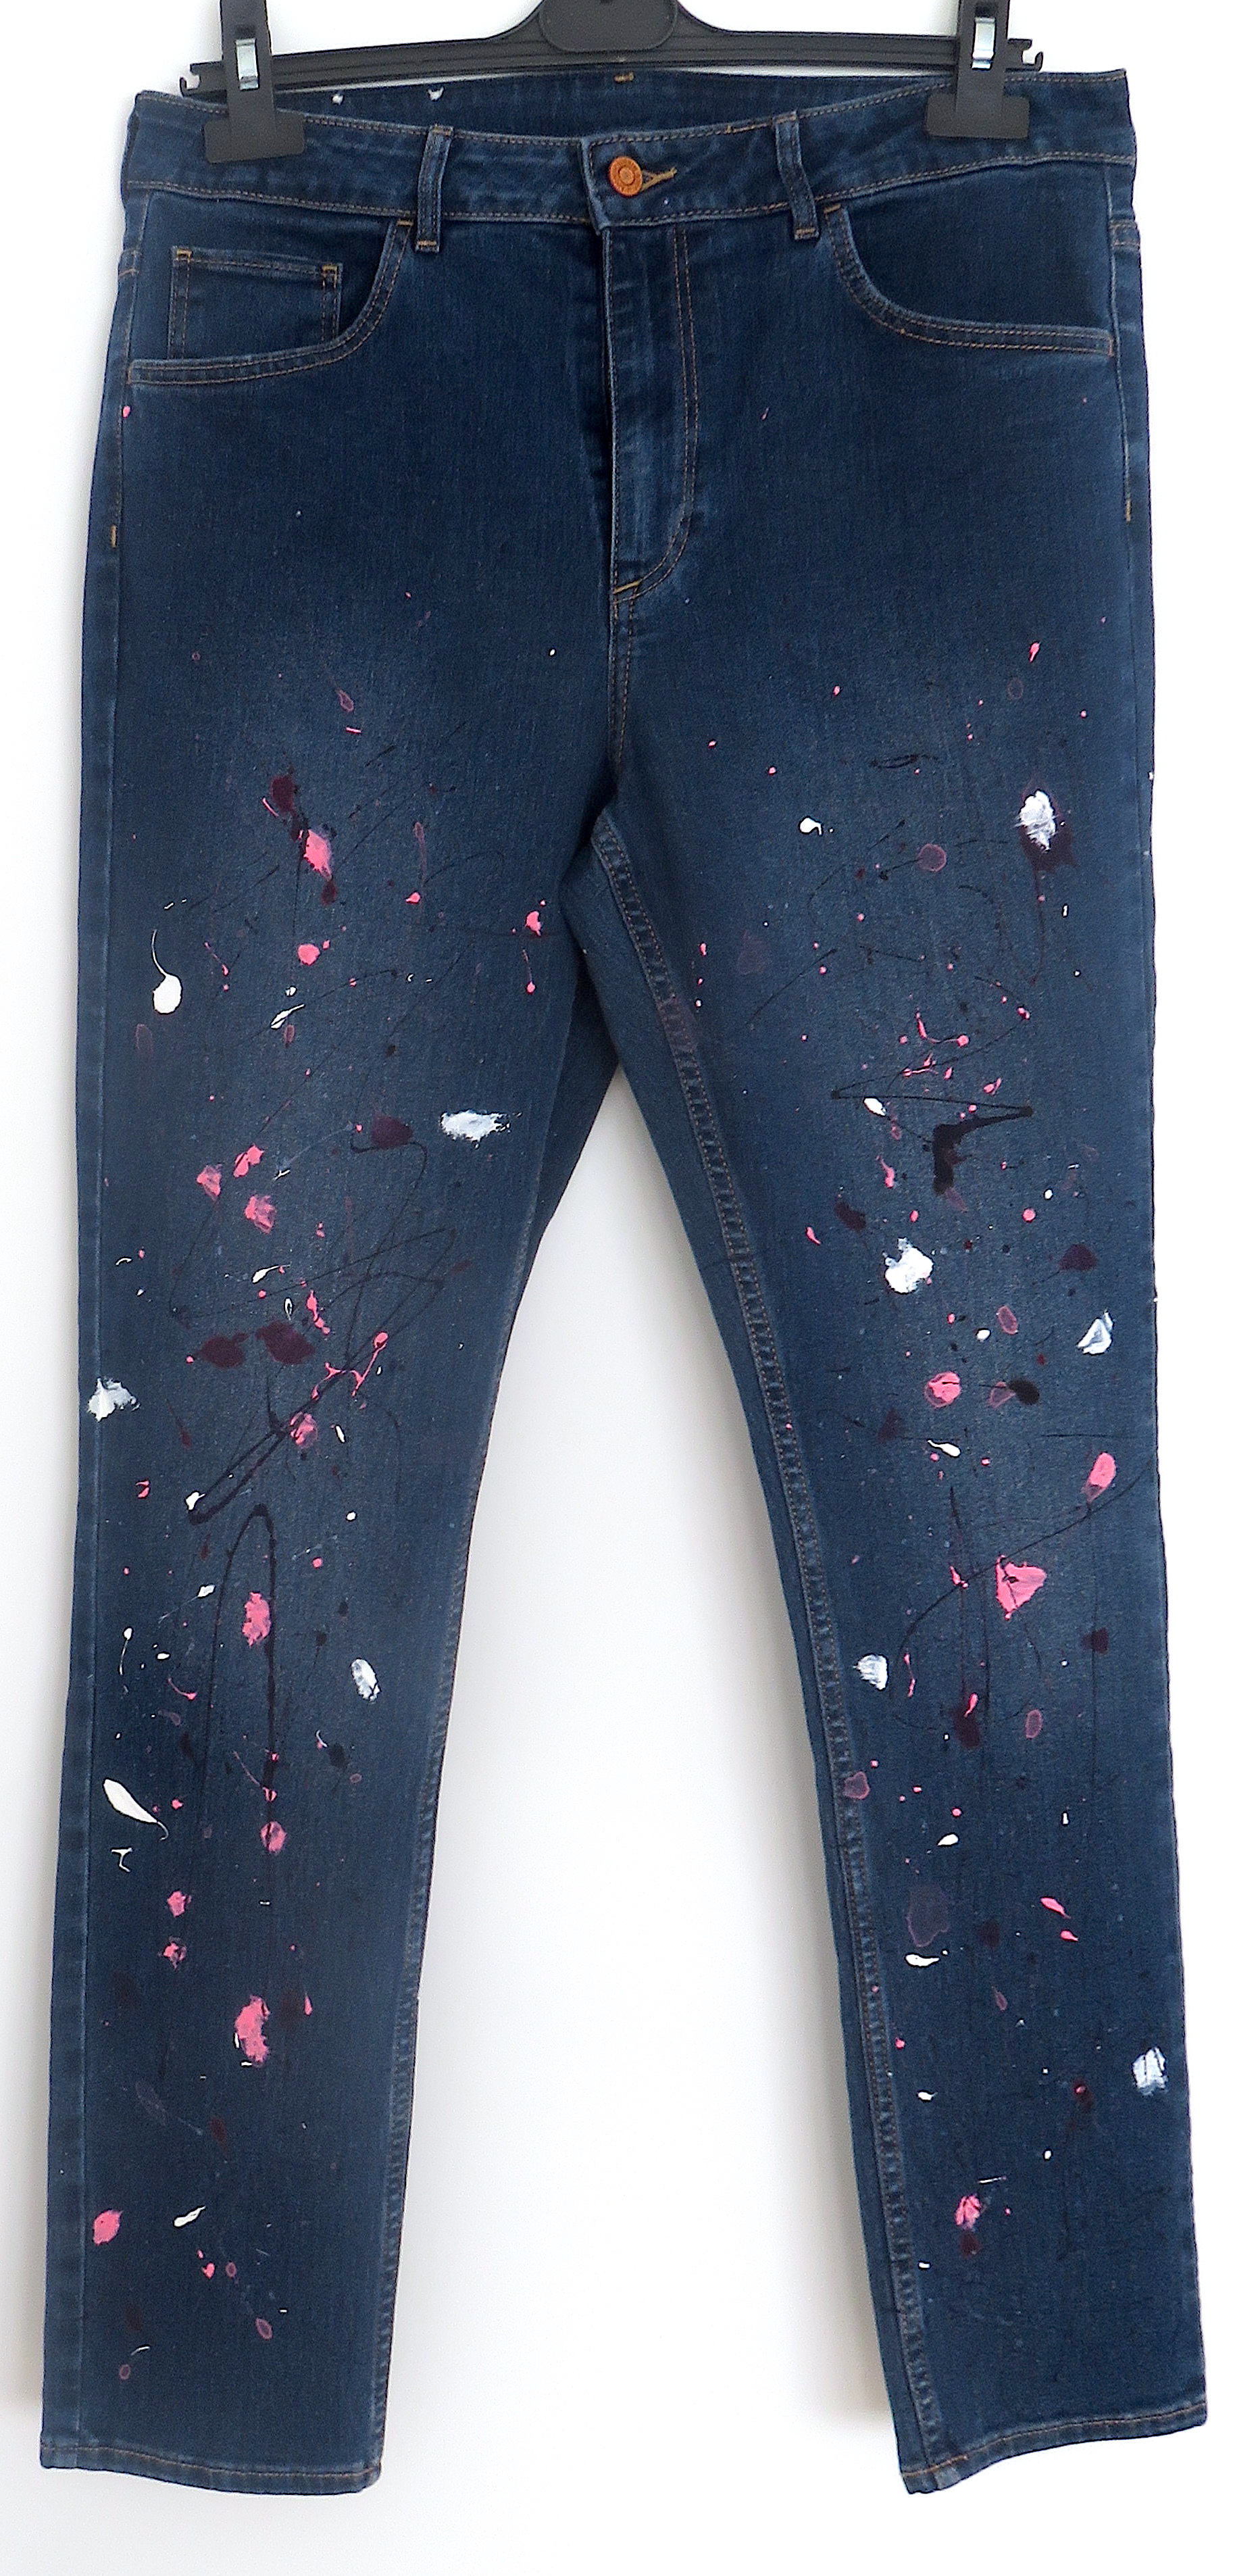 paint-splatter-jeans